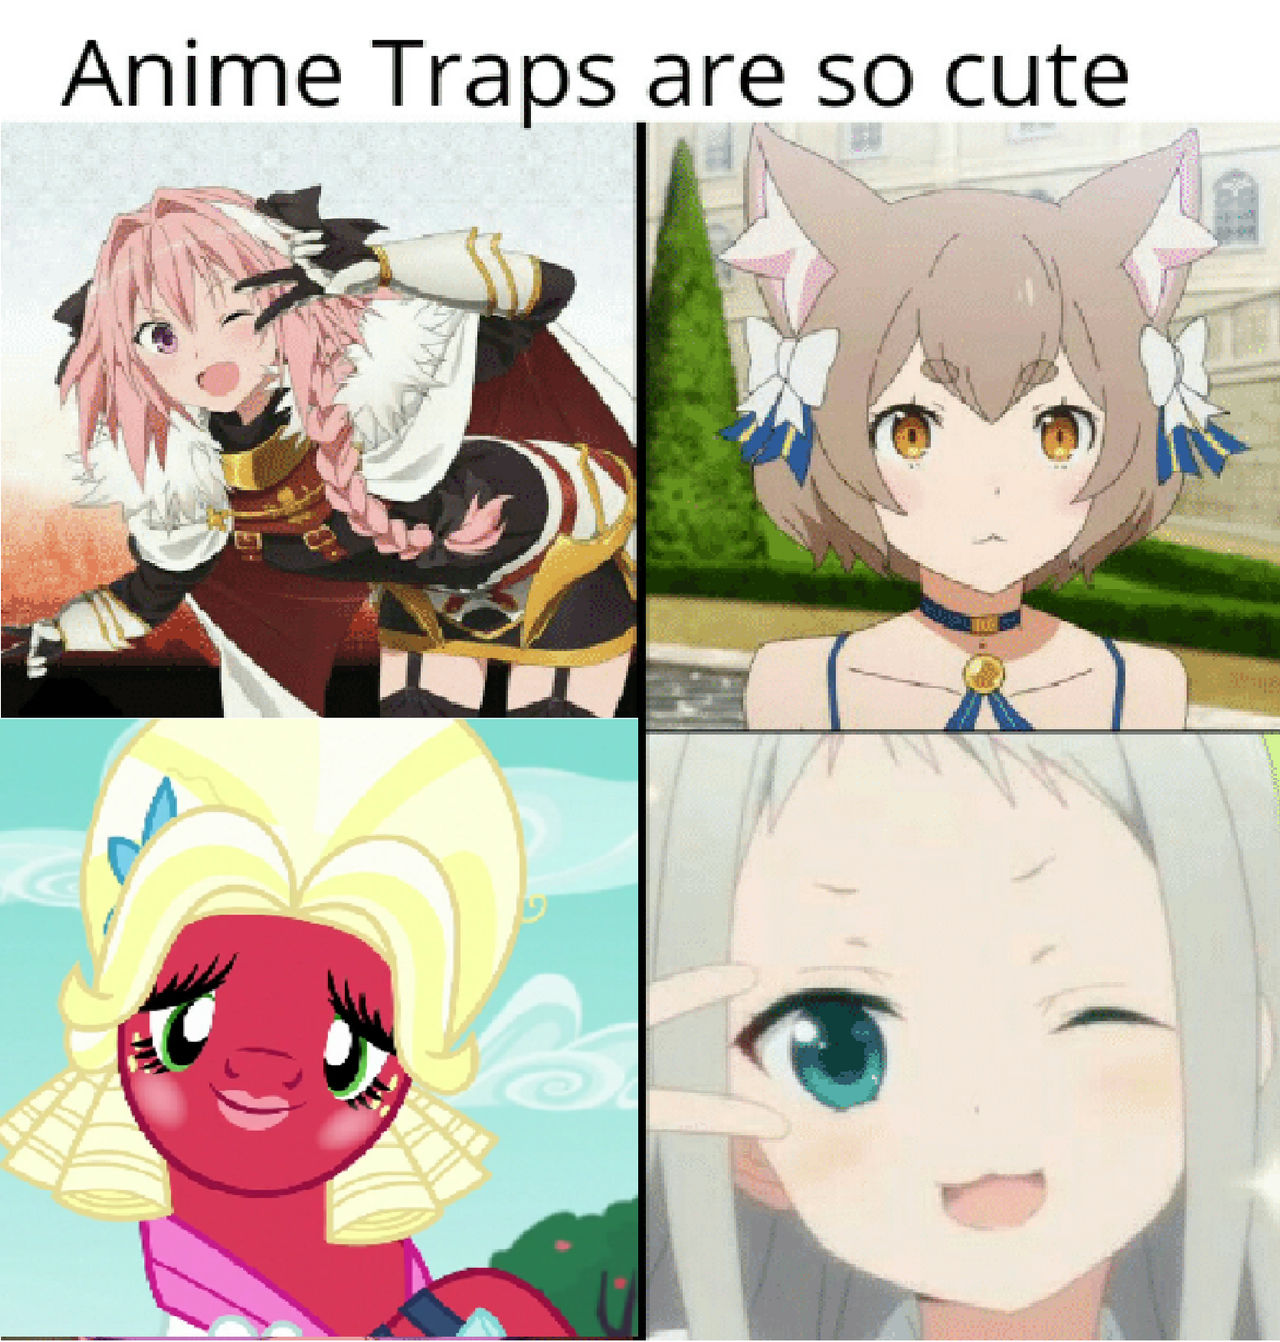 Anime Traps-My Little pony Meme. by brandonale on DeviantArt